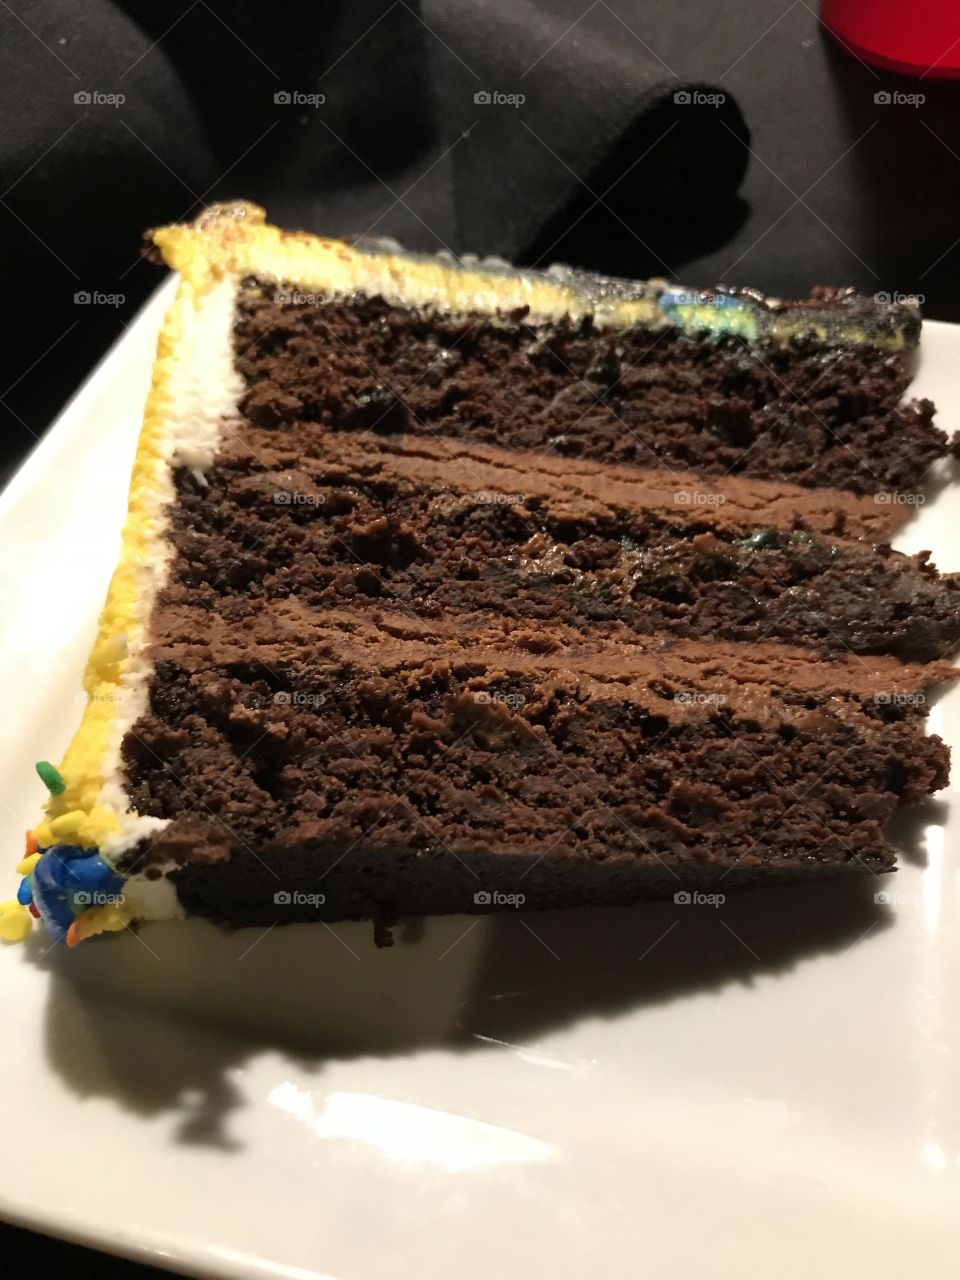 Yummy cake